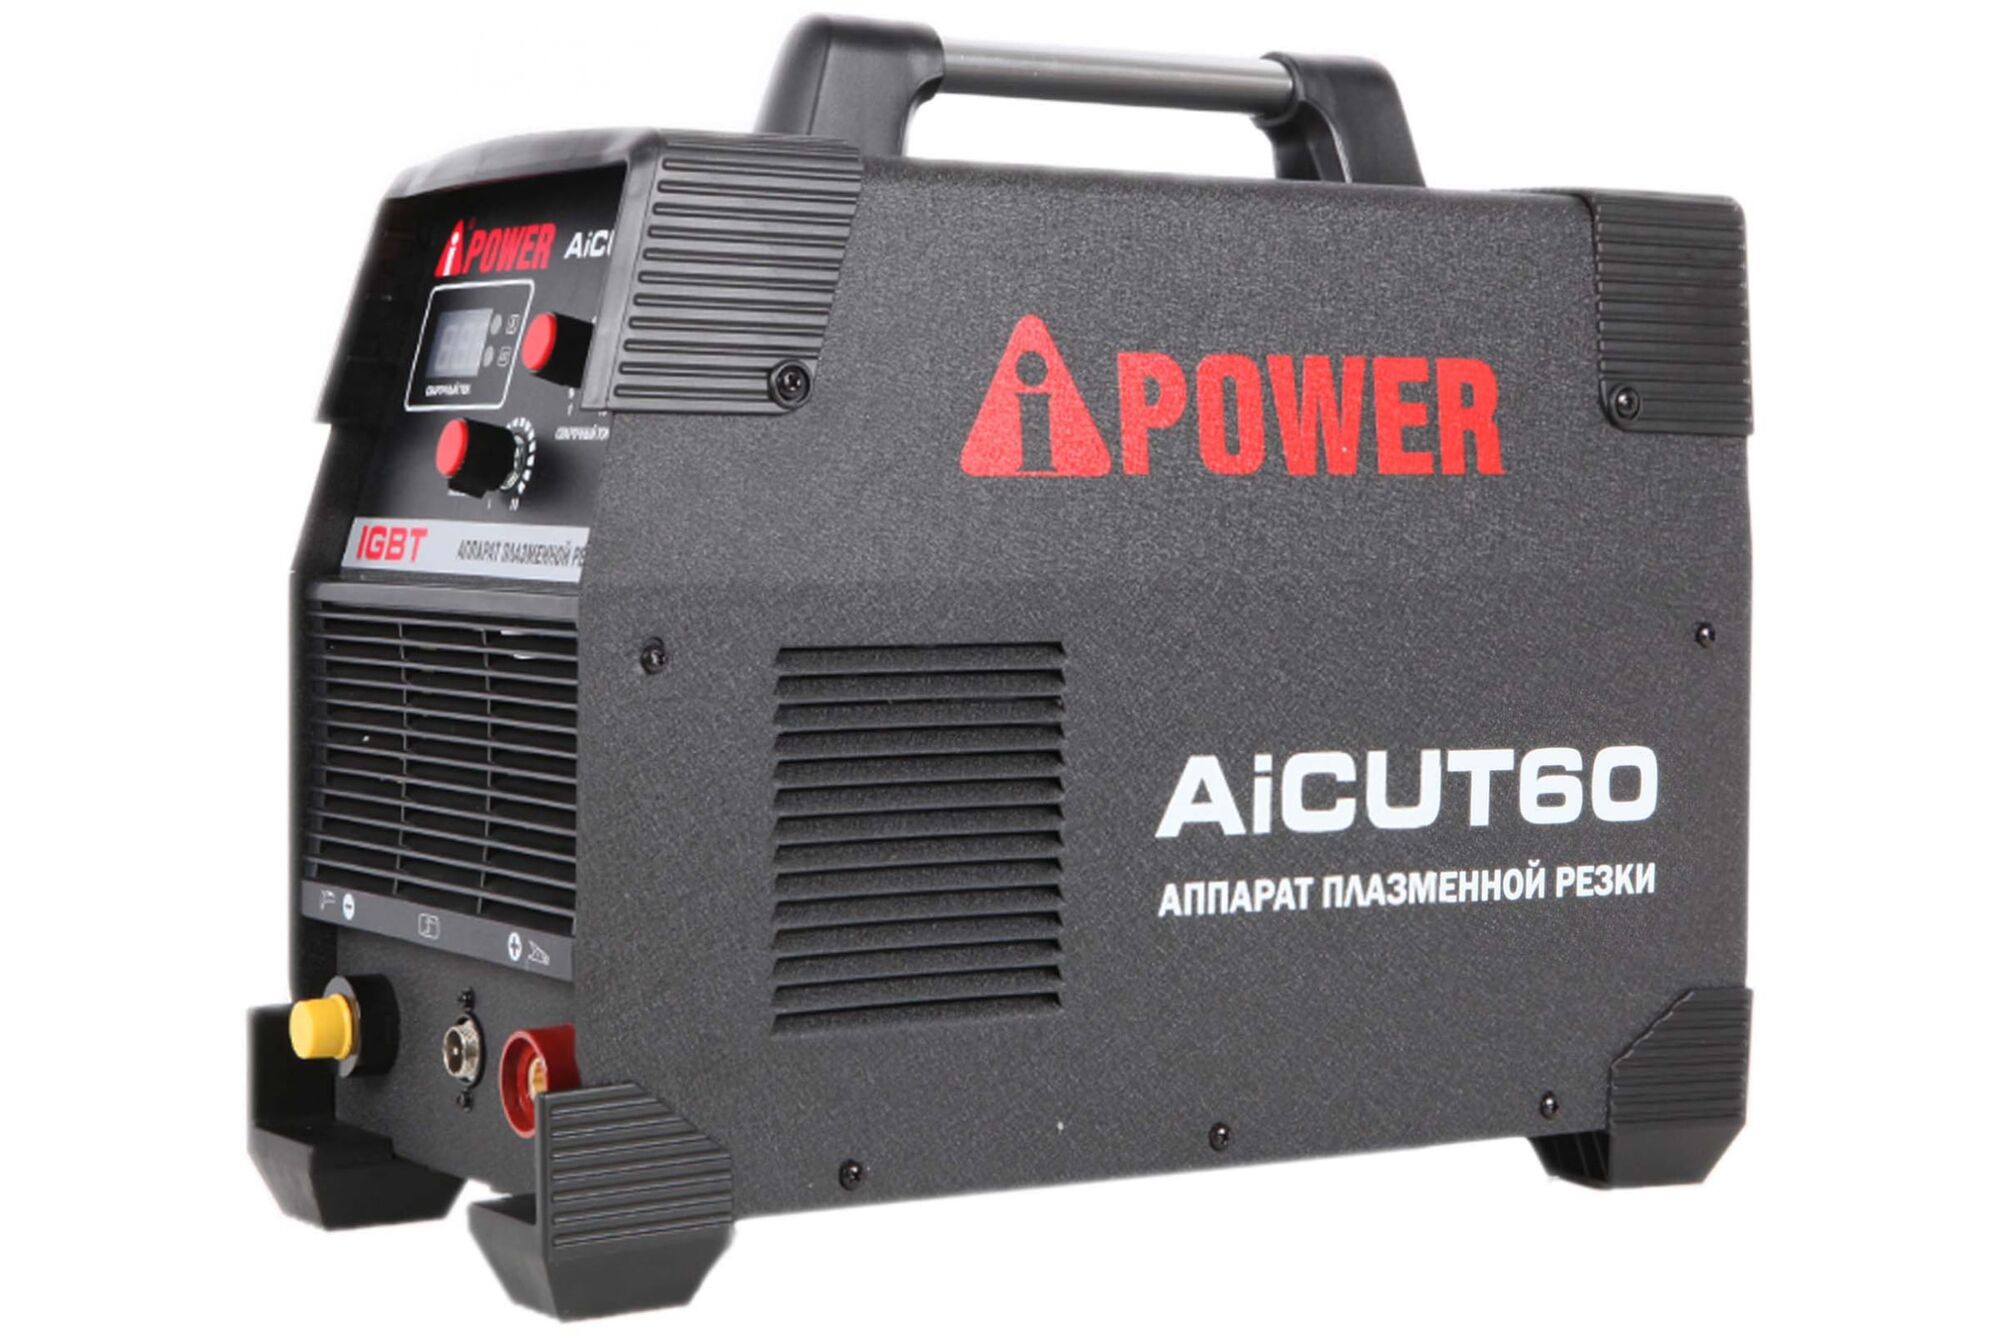 Аппарат плазменной резки A-iPower AiCUT60 63060